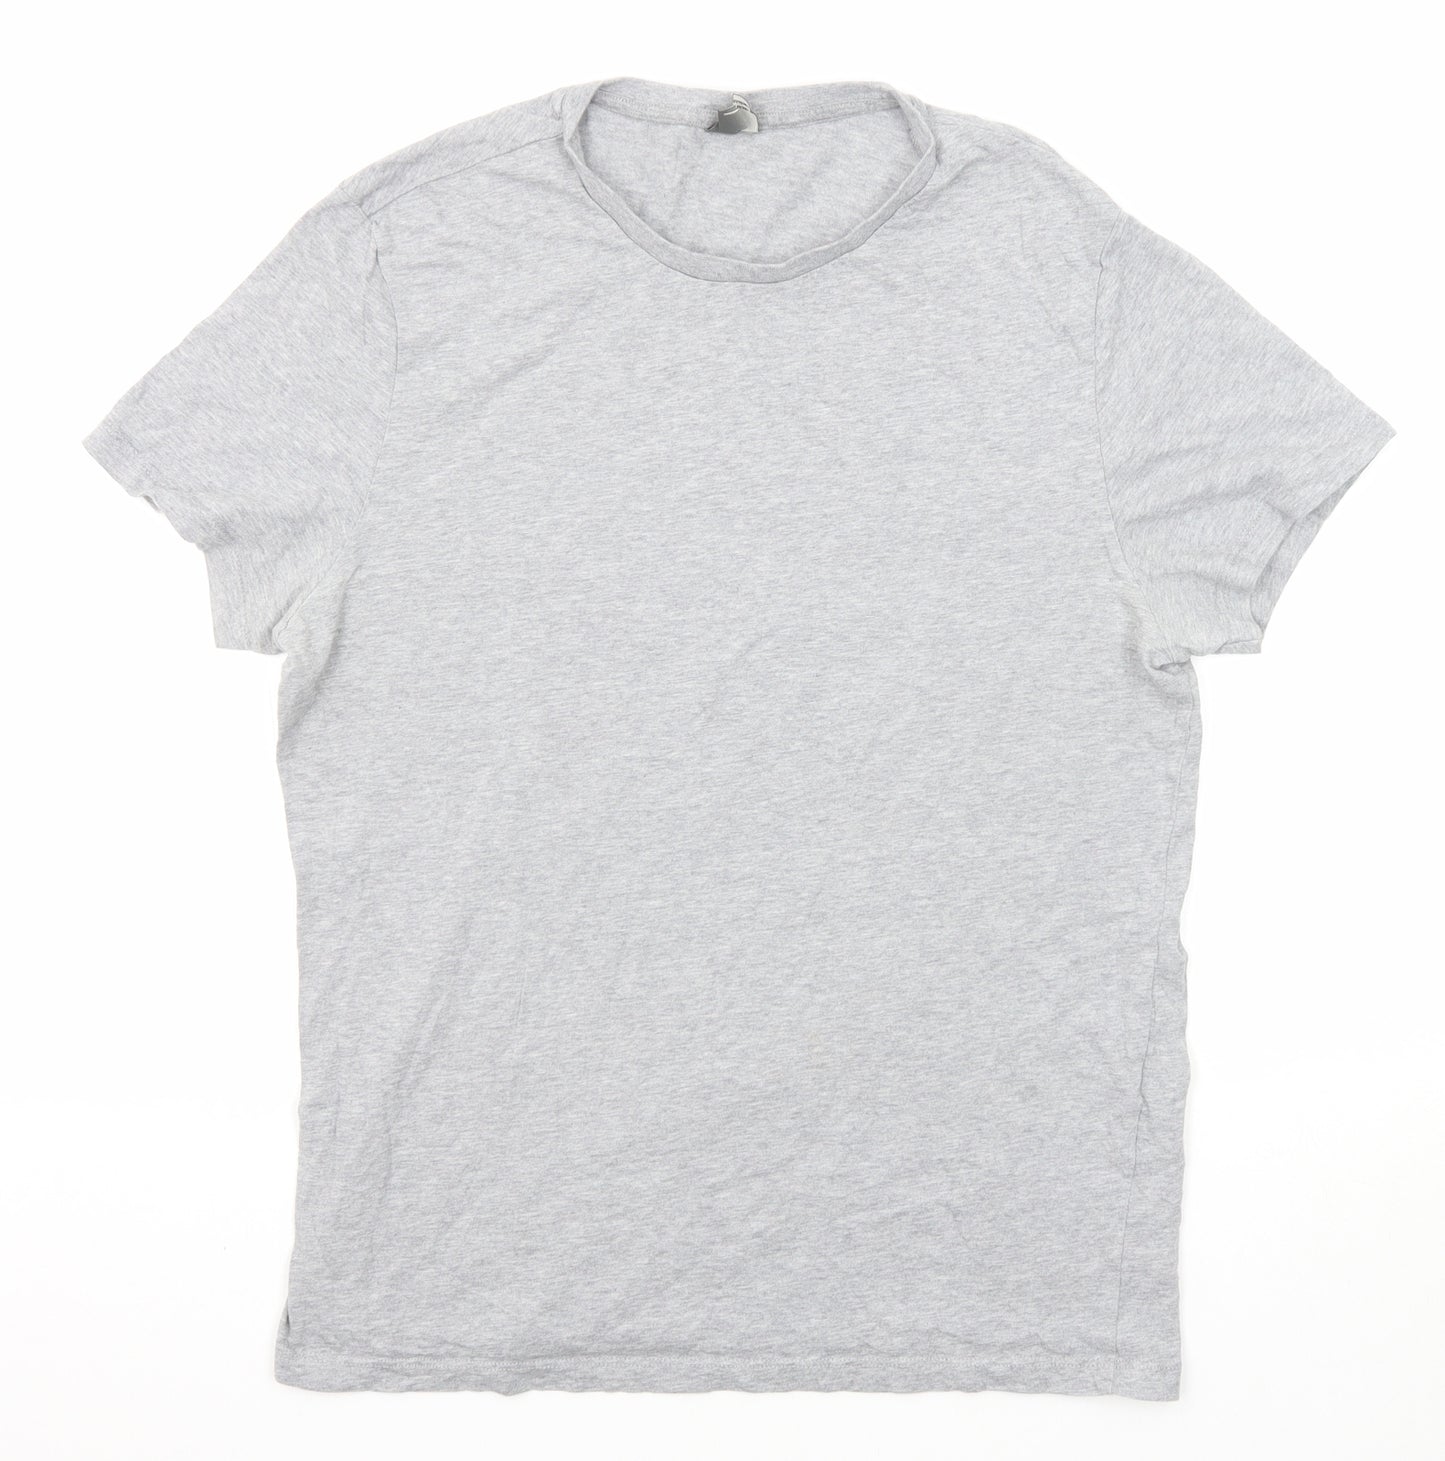 ASOS Womens Grey Cotton Basic T-Shirt Size L Crew Neck